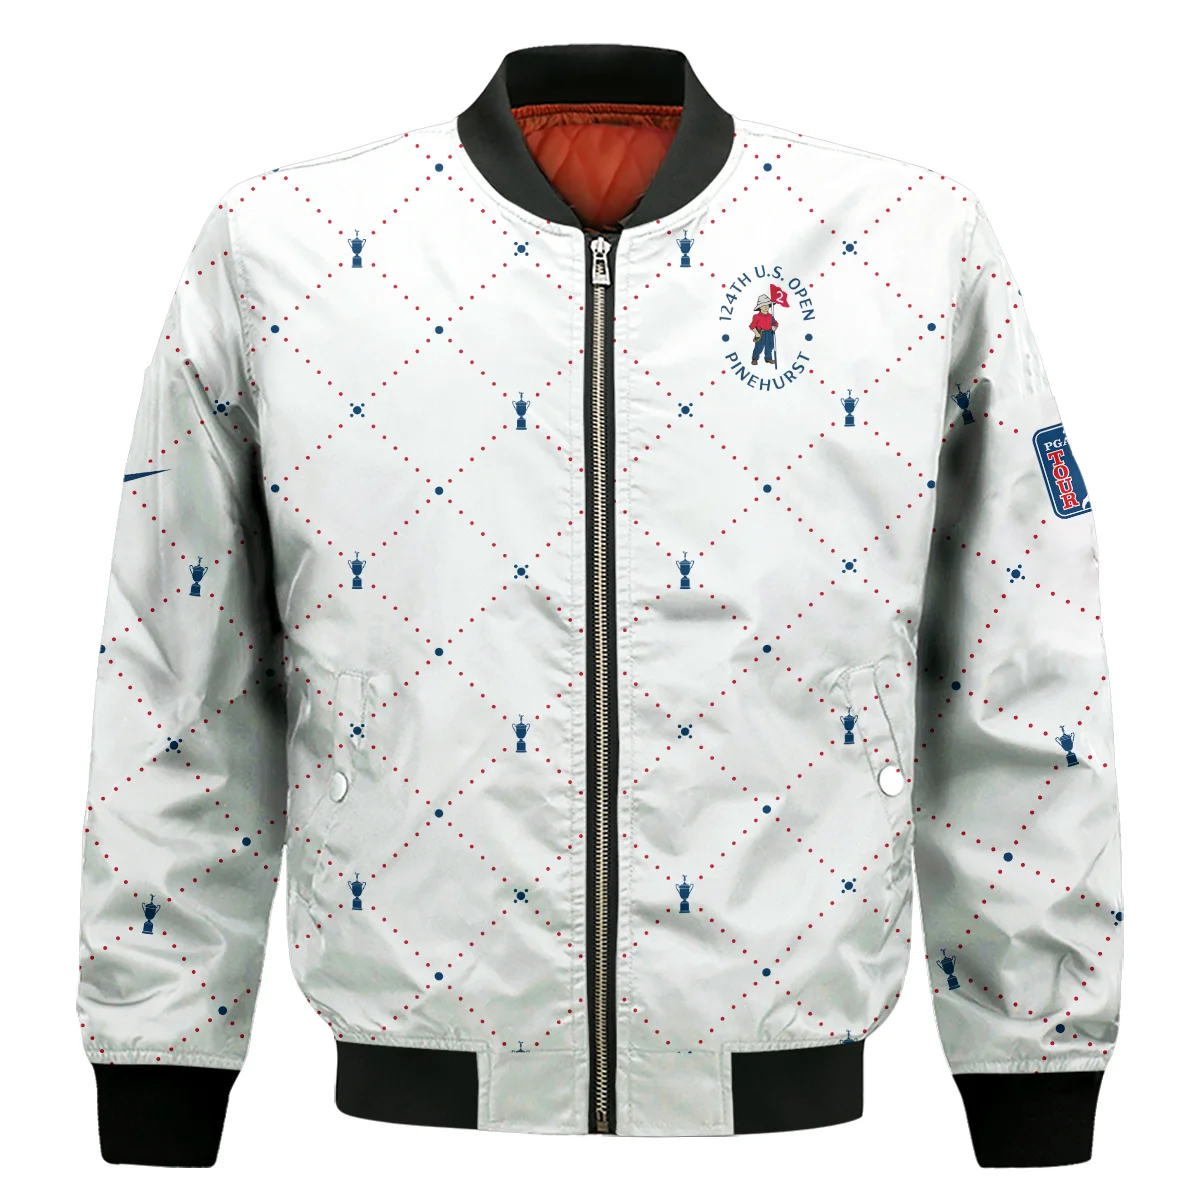 Argyle Pattern With Cup 124th U.S. Open Pinehurst Nike Quarter-Zip Jacket Style Classic Quarter-Zip Jacket